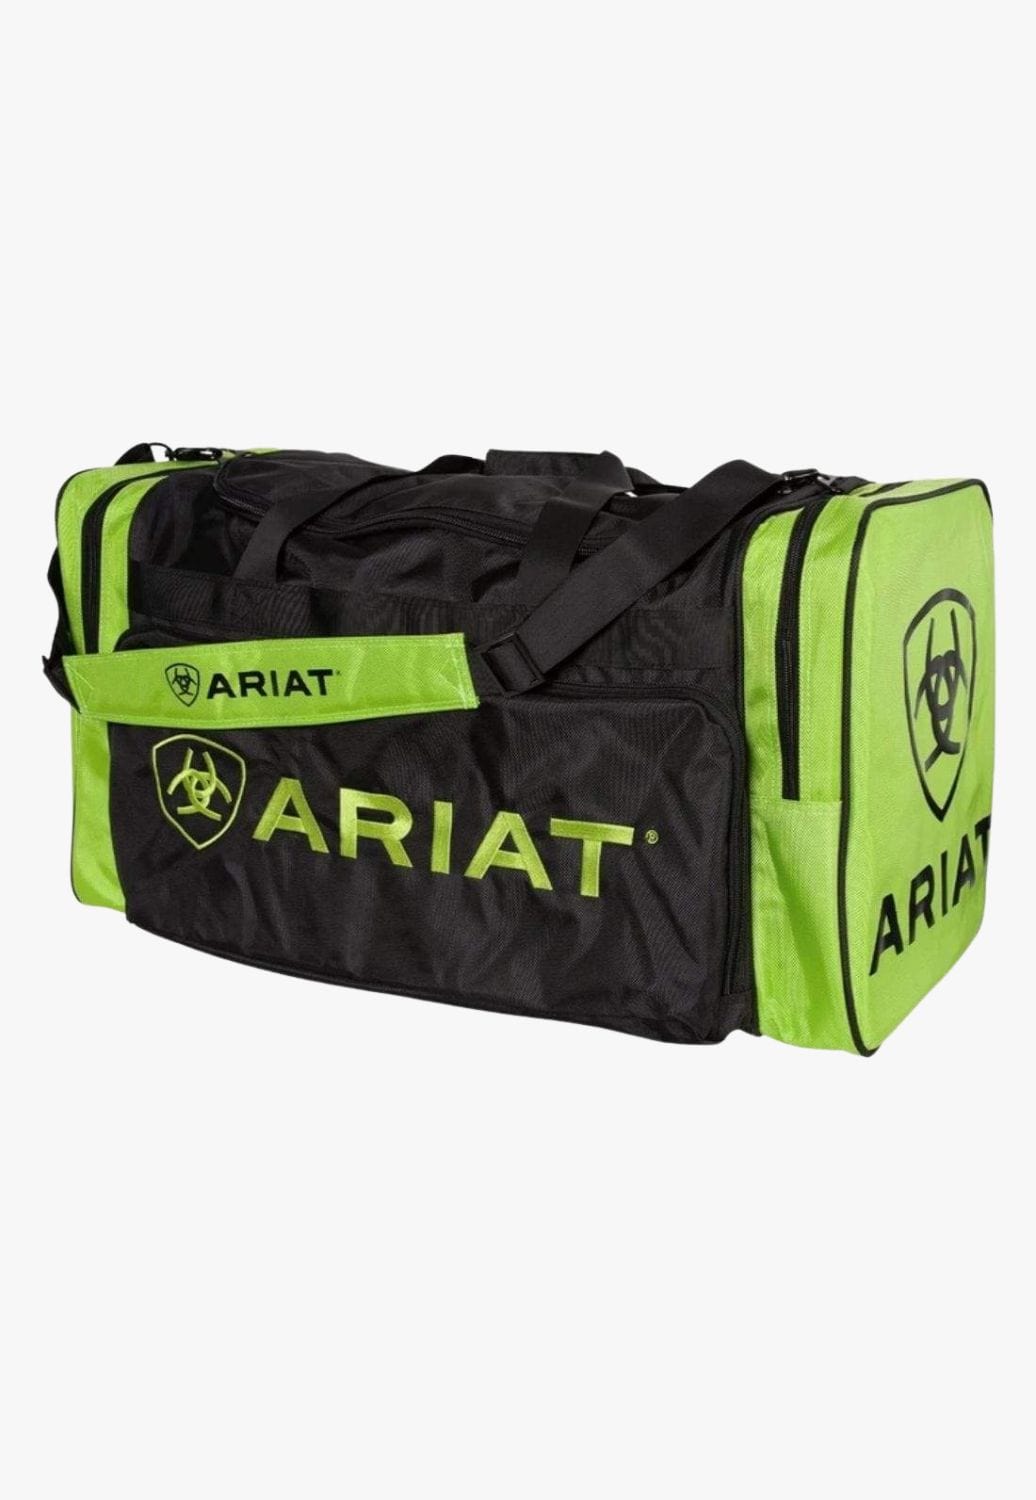 Ariat TRAVEL - Travel Bags Green/Black Ariat Gear Bag